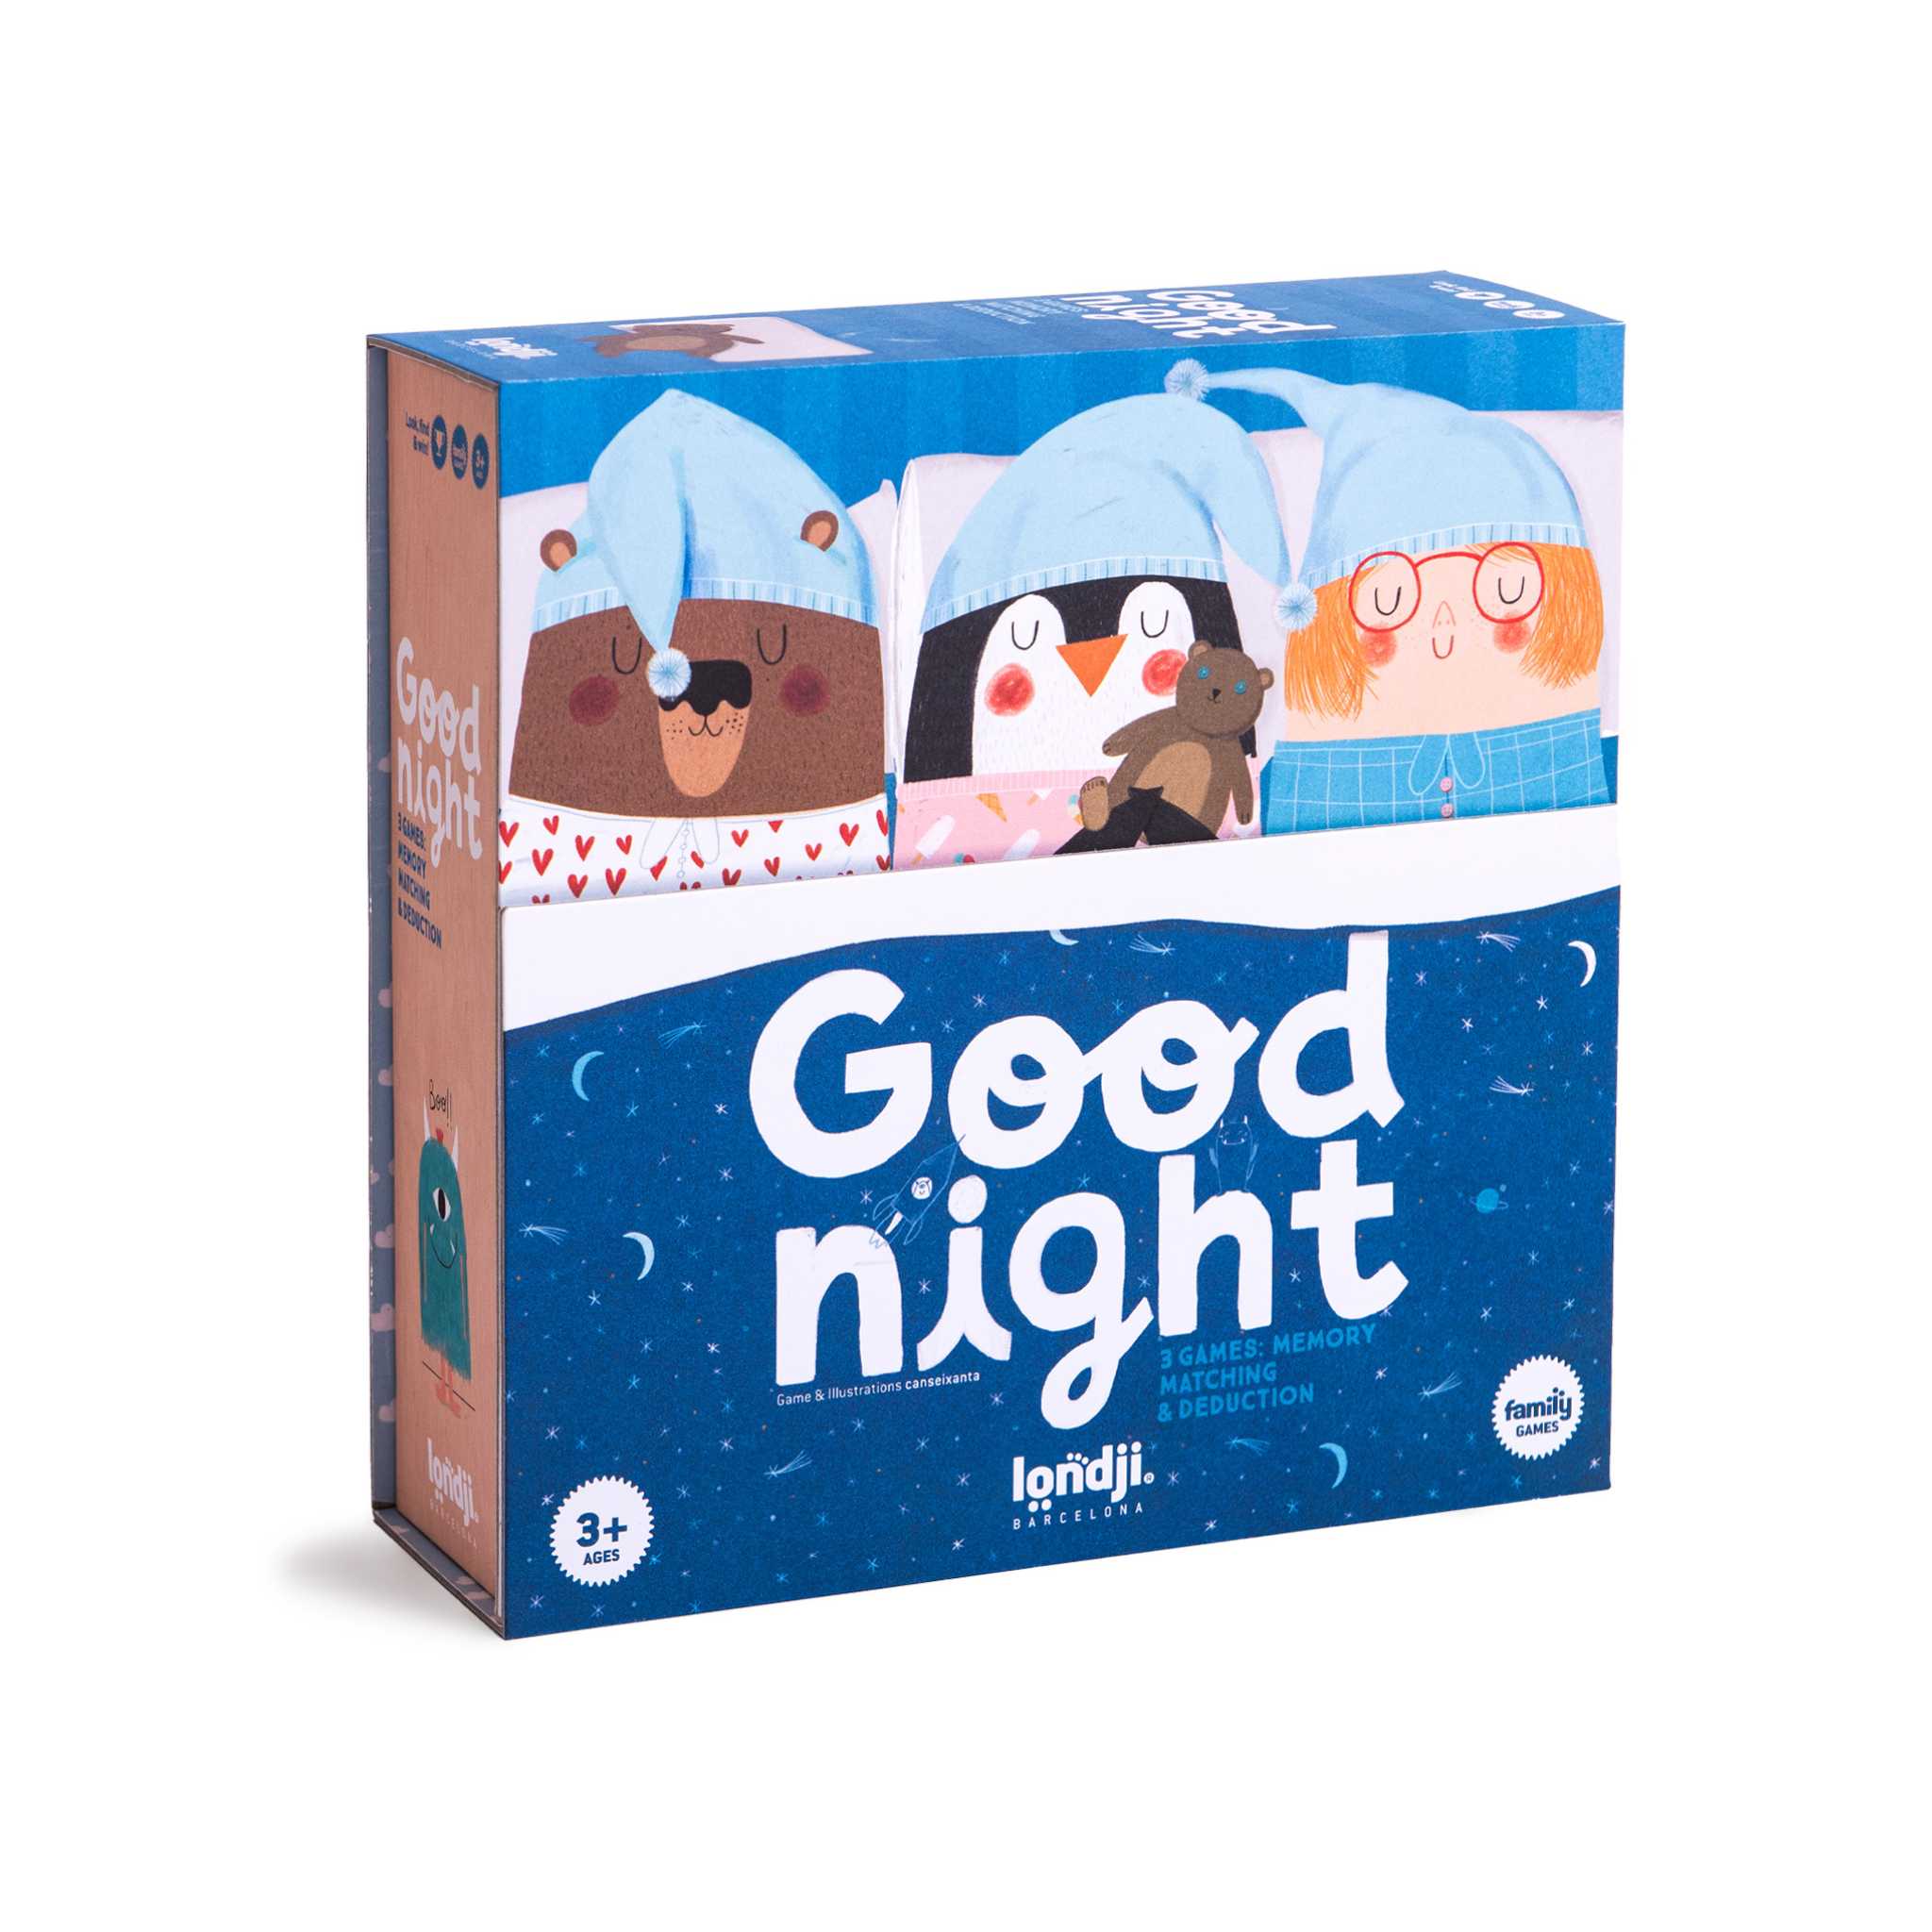 Londji Goodnight Game Box